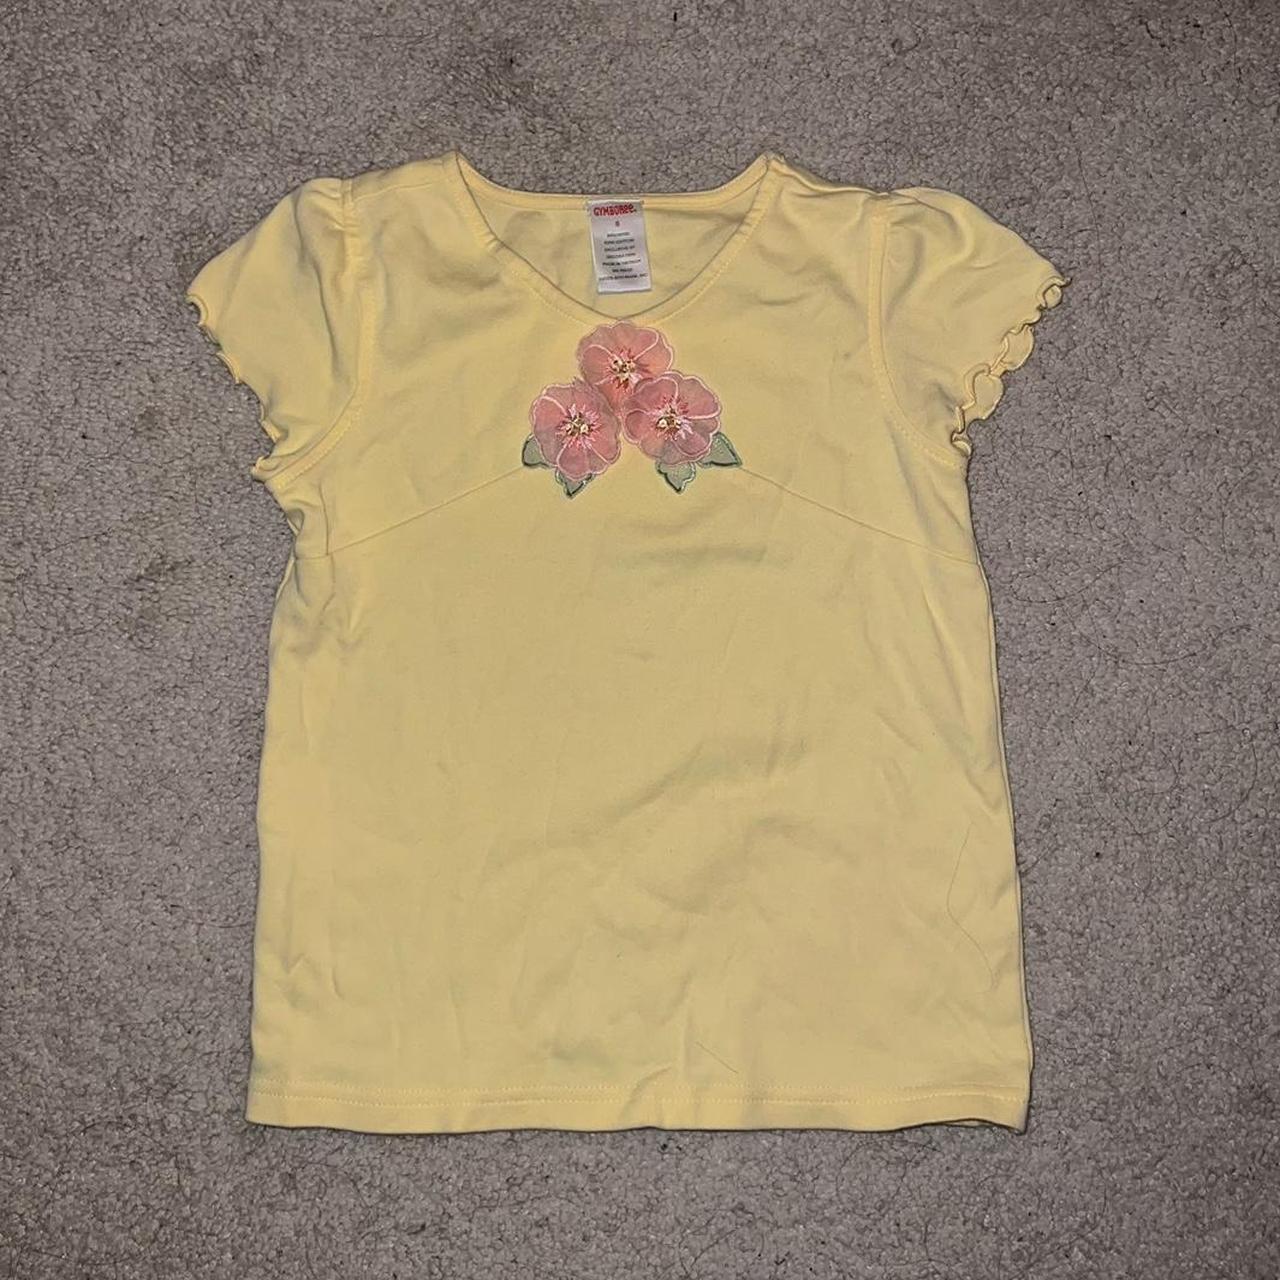 Gymboree Women's Yellow T-shirt